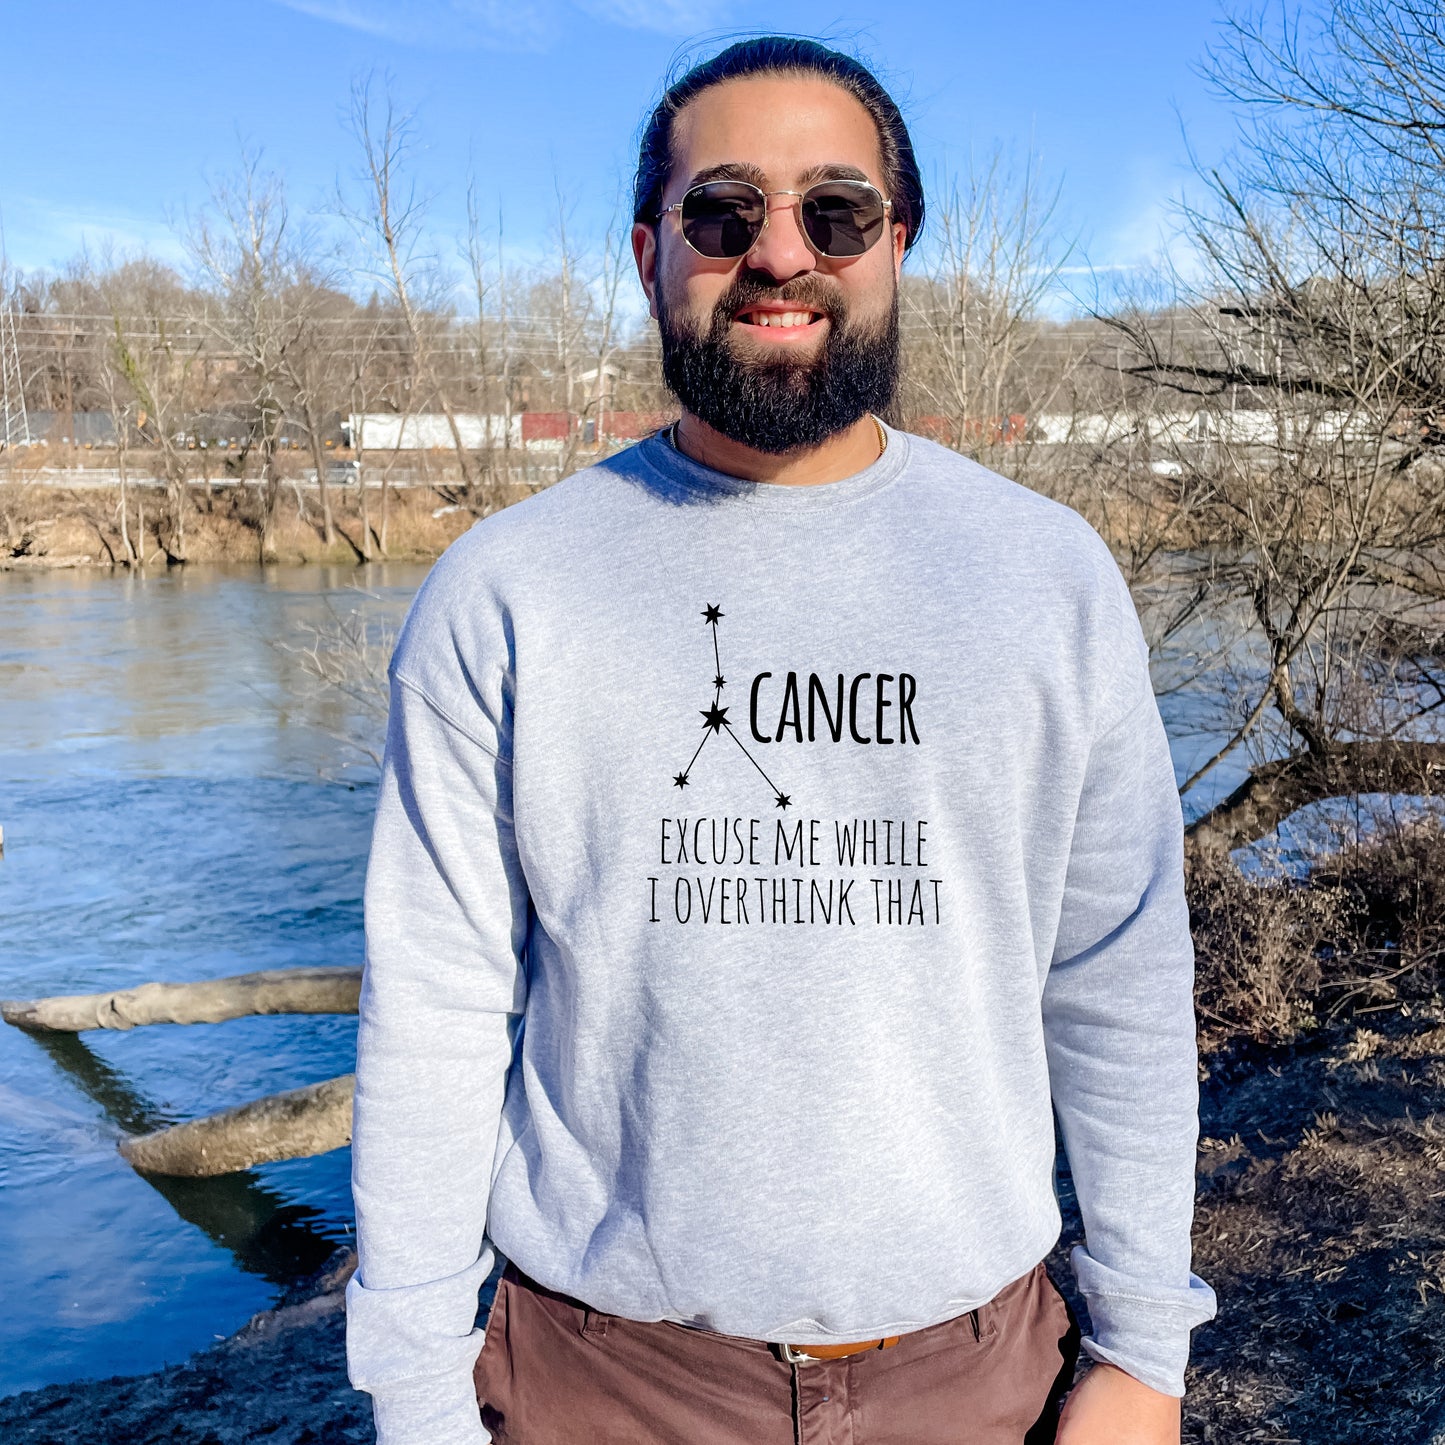 Cancer - Unisex Sweatshirt - Heather Gray or Dusty Blue